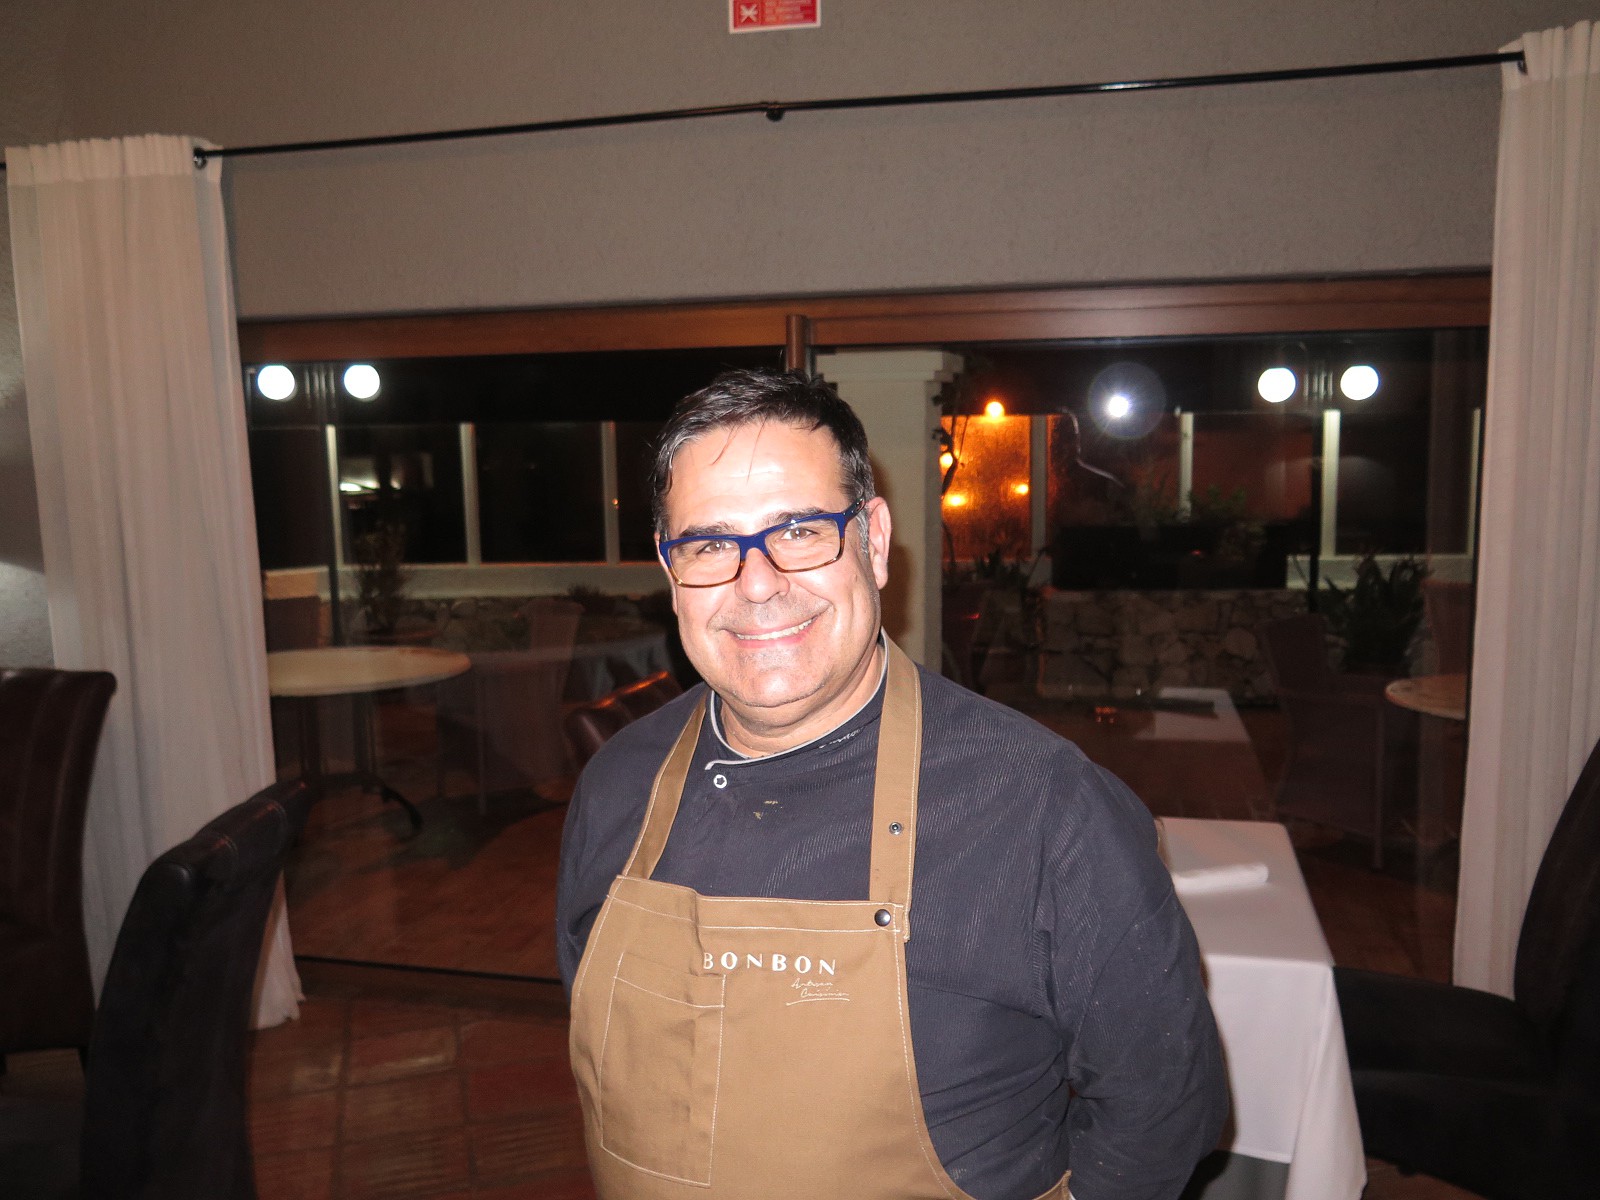 Raul Cachola, chefe de pastelaria do BON BON